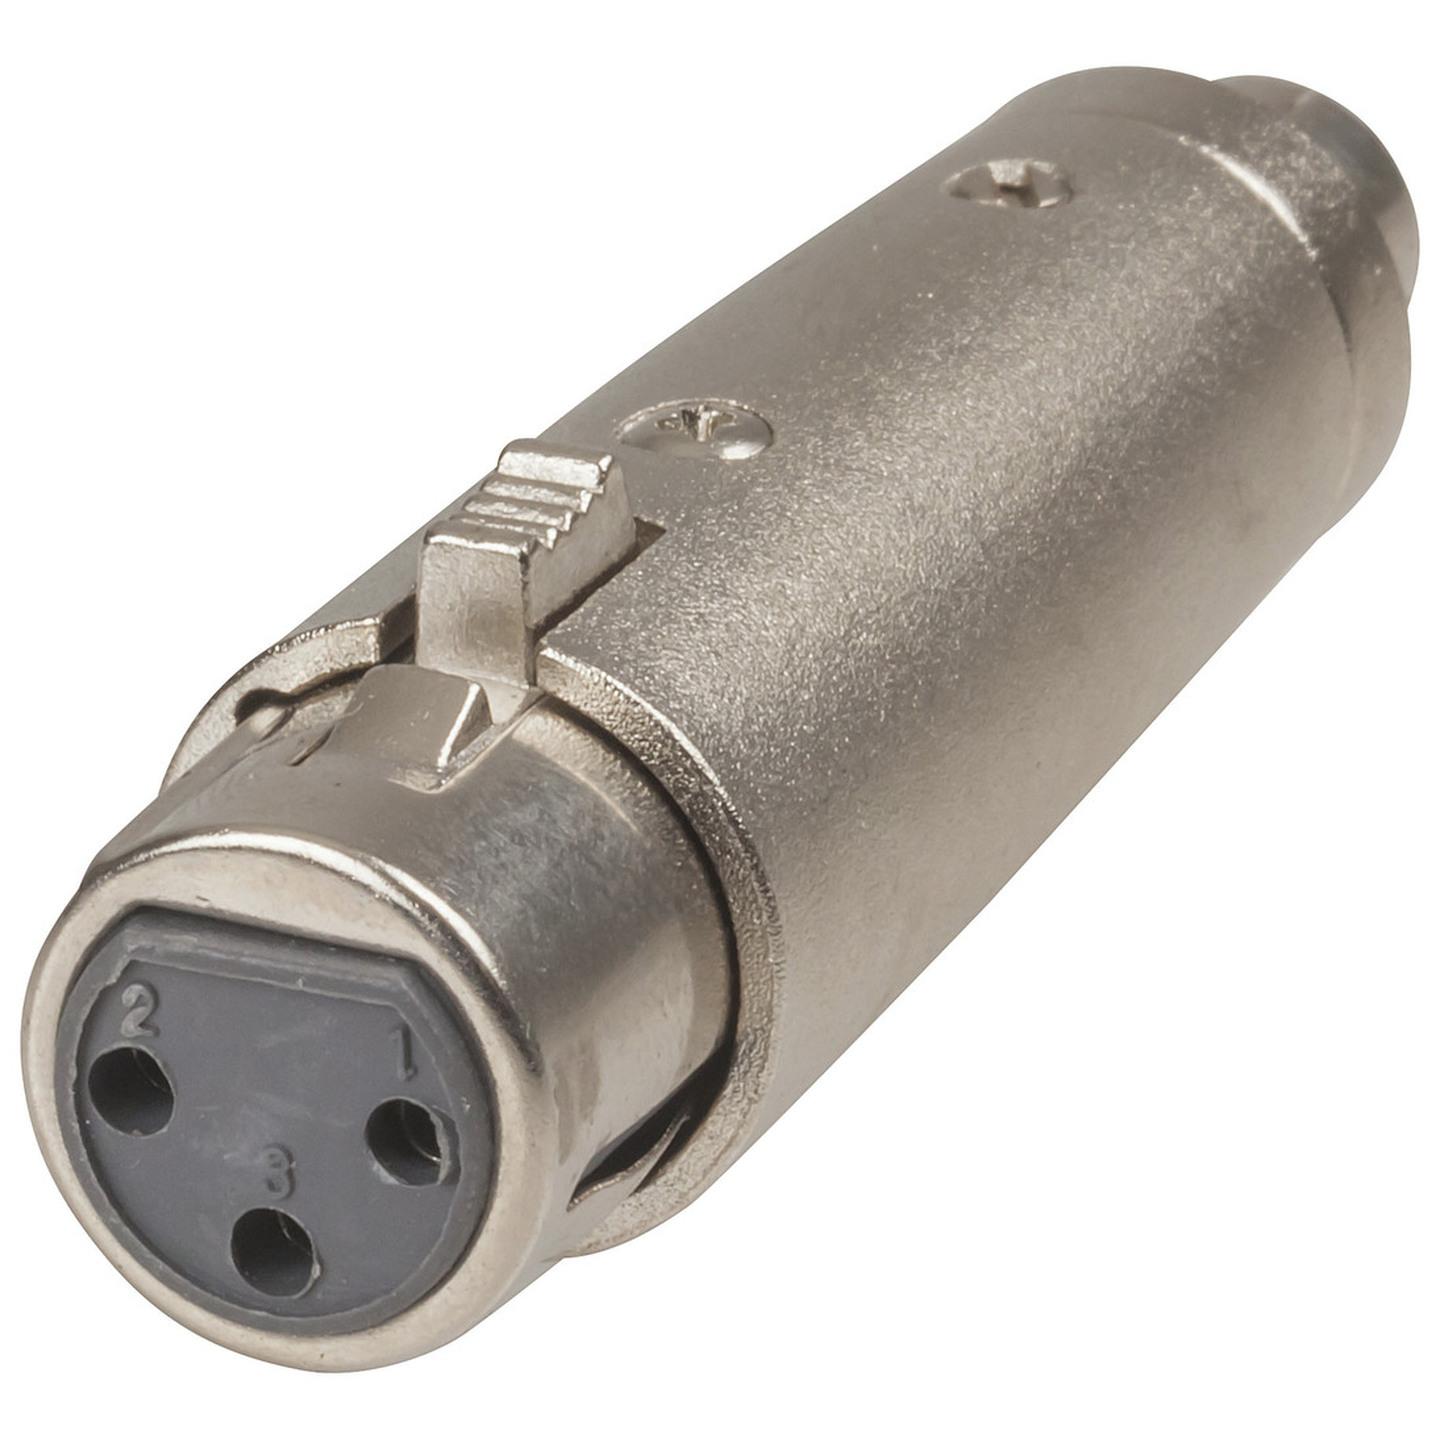 3 Pin XLR Type Socket to RCA Plug Adaptor